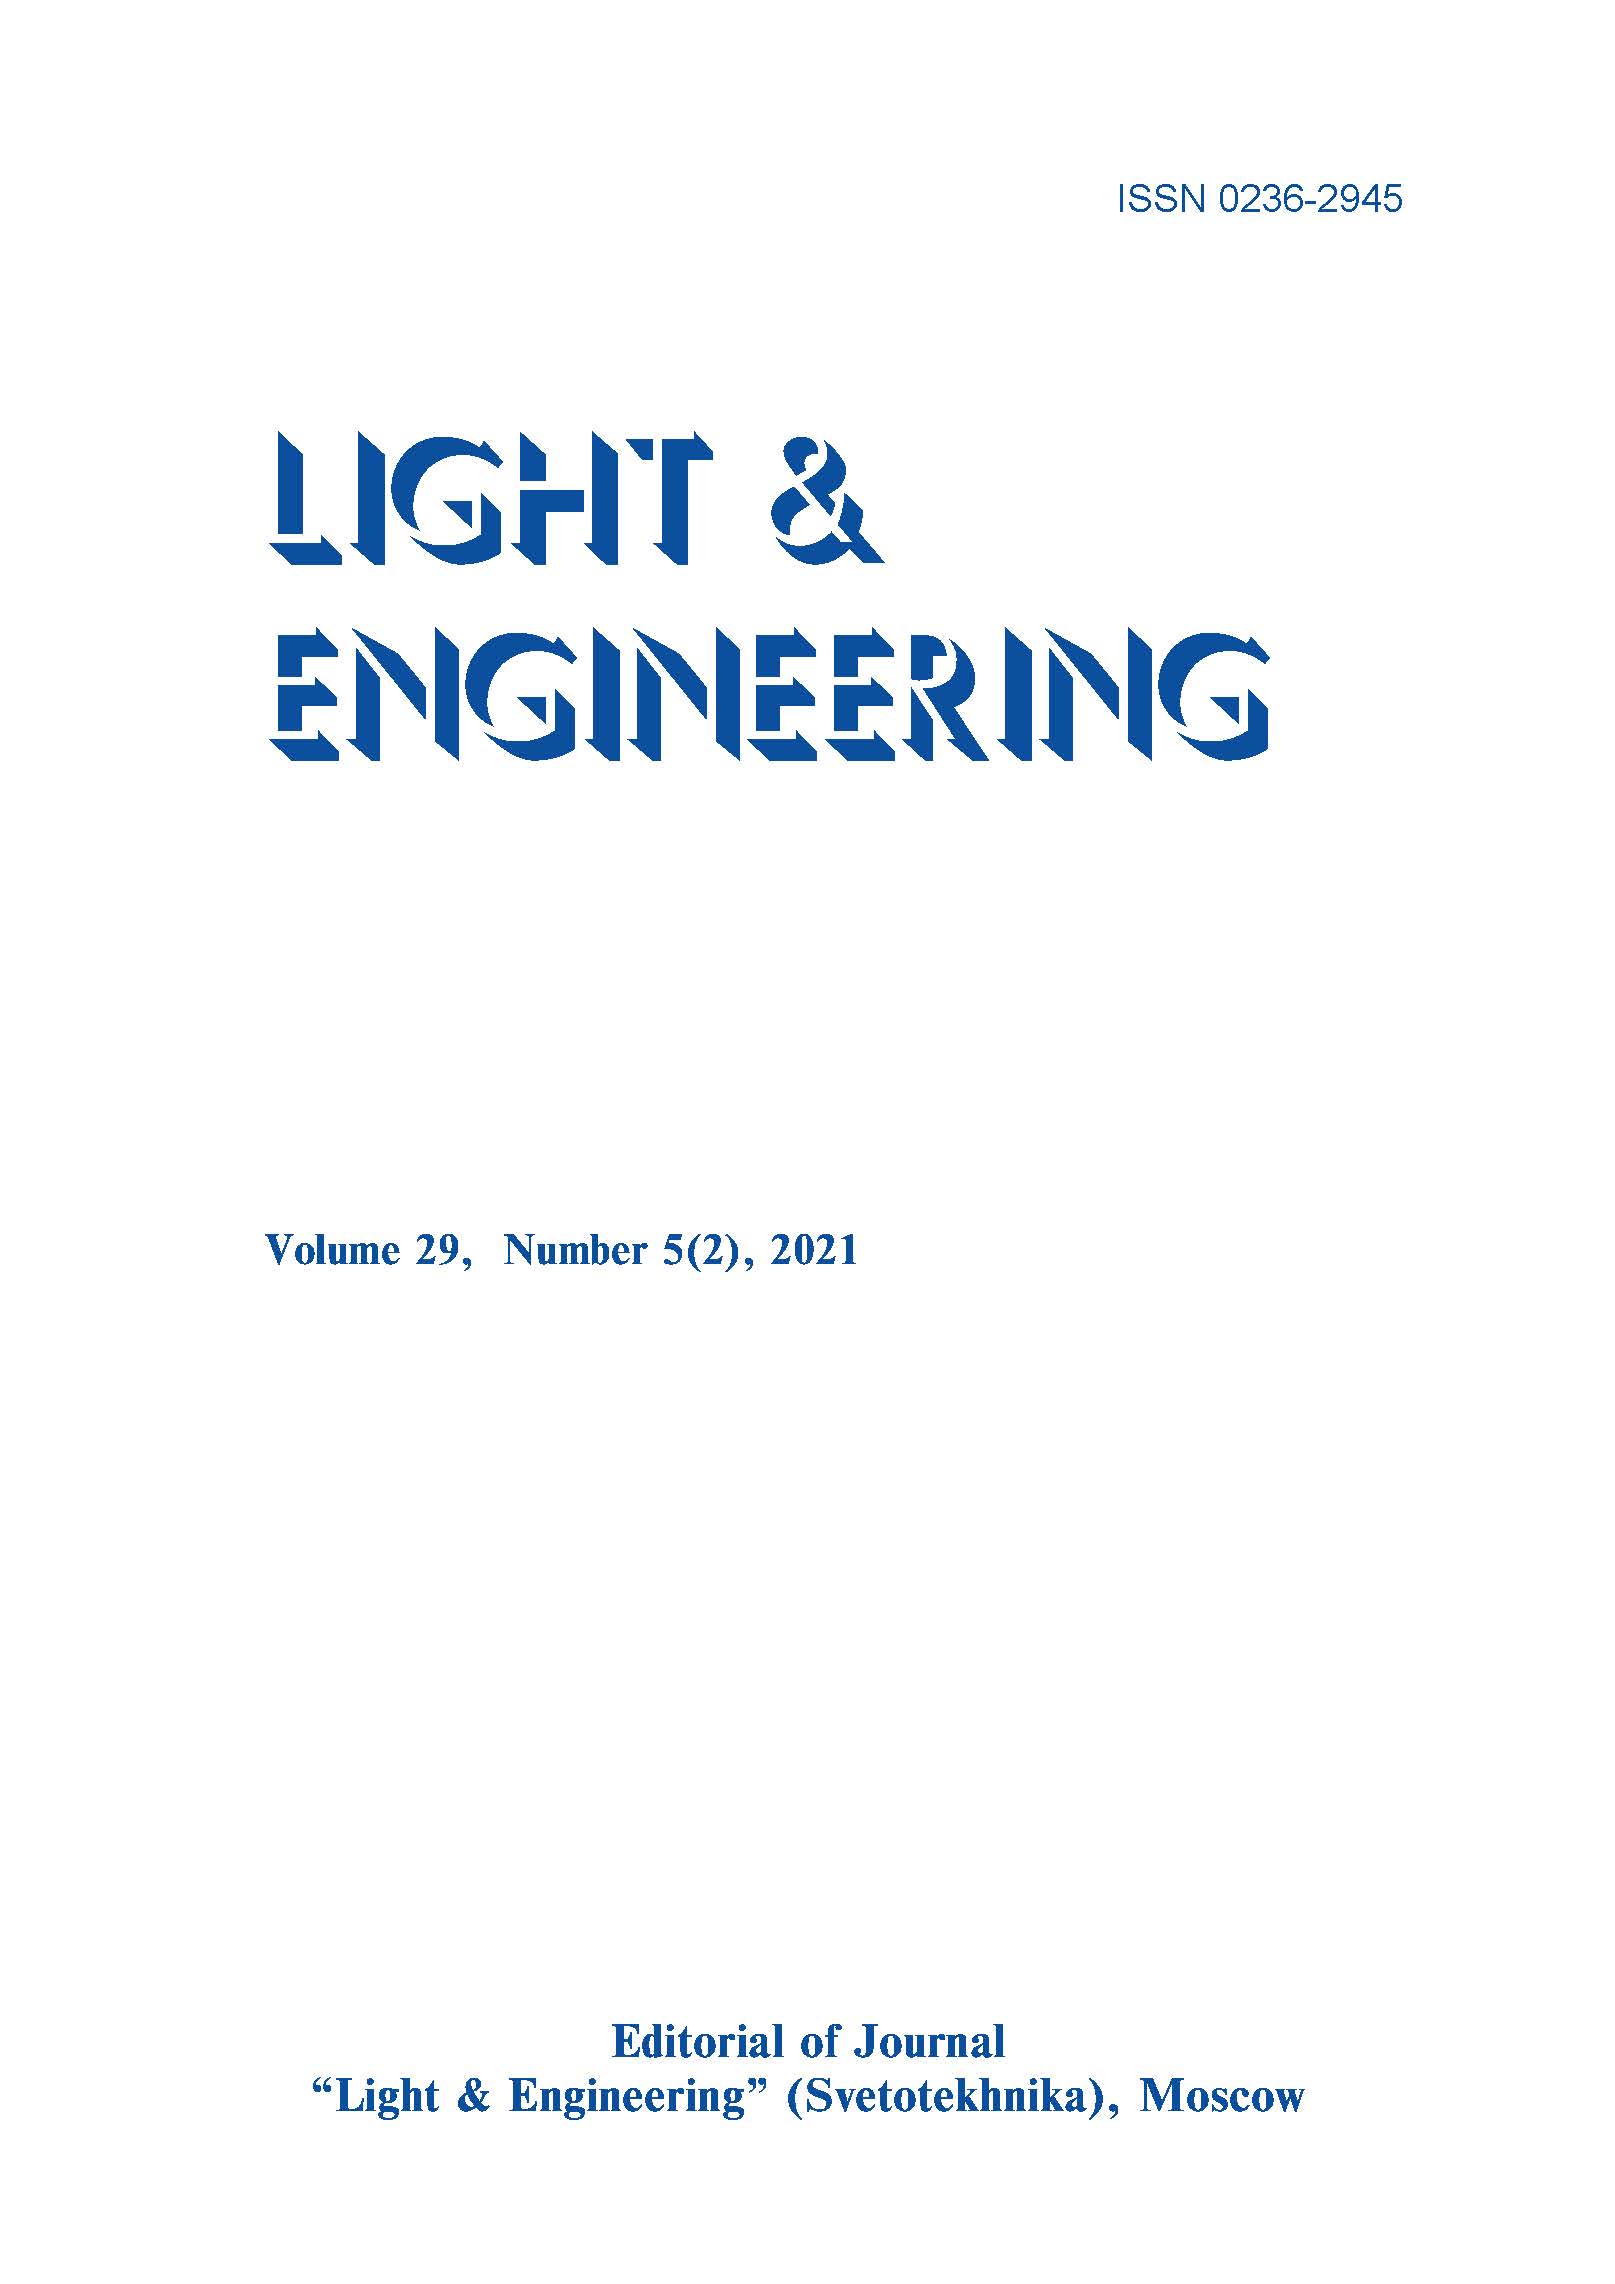 Analysis of Tungsten Halogen Lamps Characteristics L&E, Vol. 29, No. 5 (2), 2021